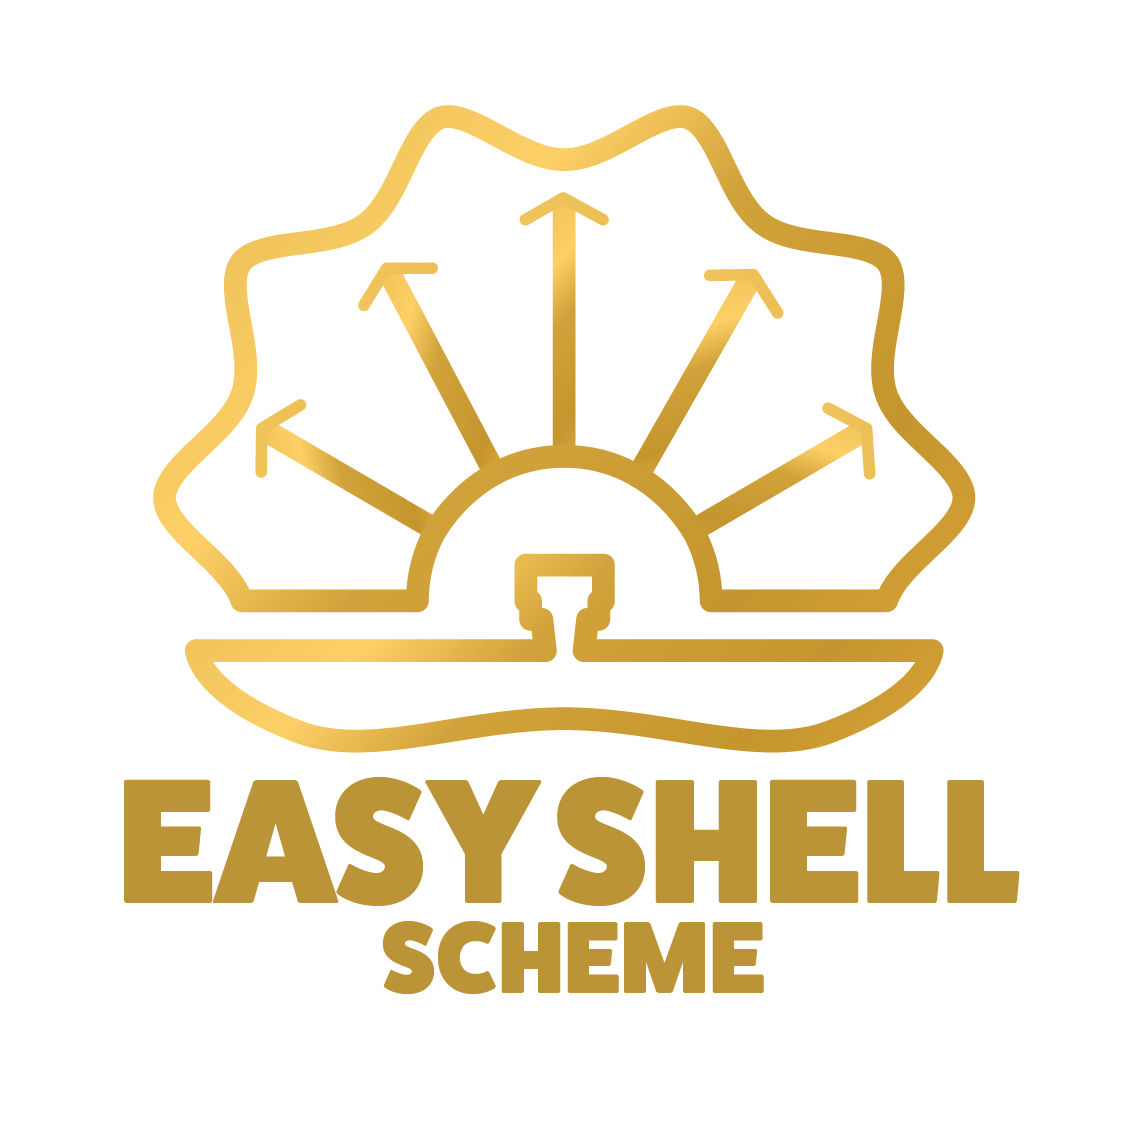 Easy shell scheme